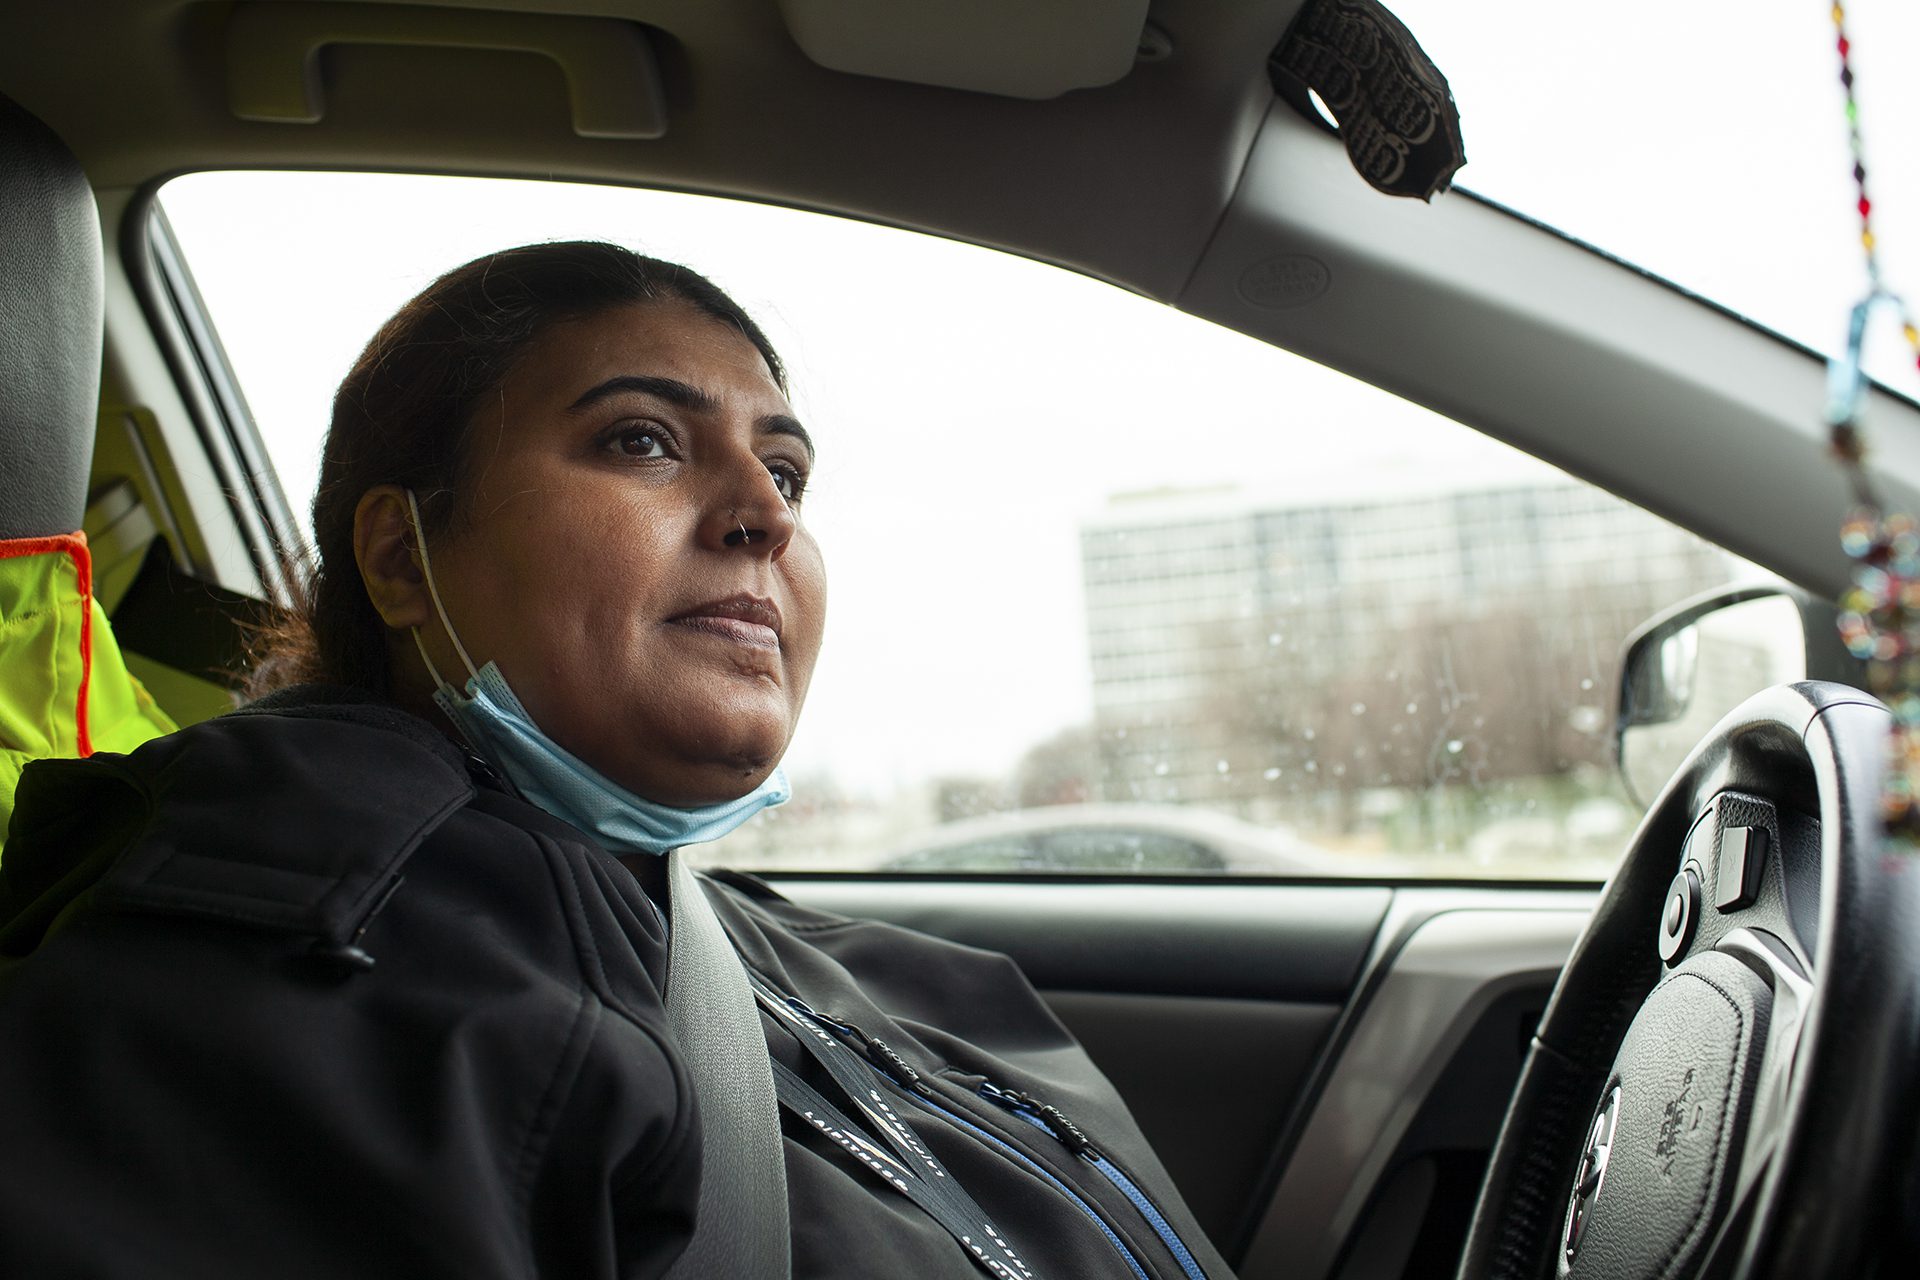 Naveen Ali drives her car